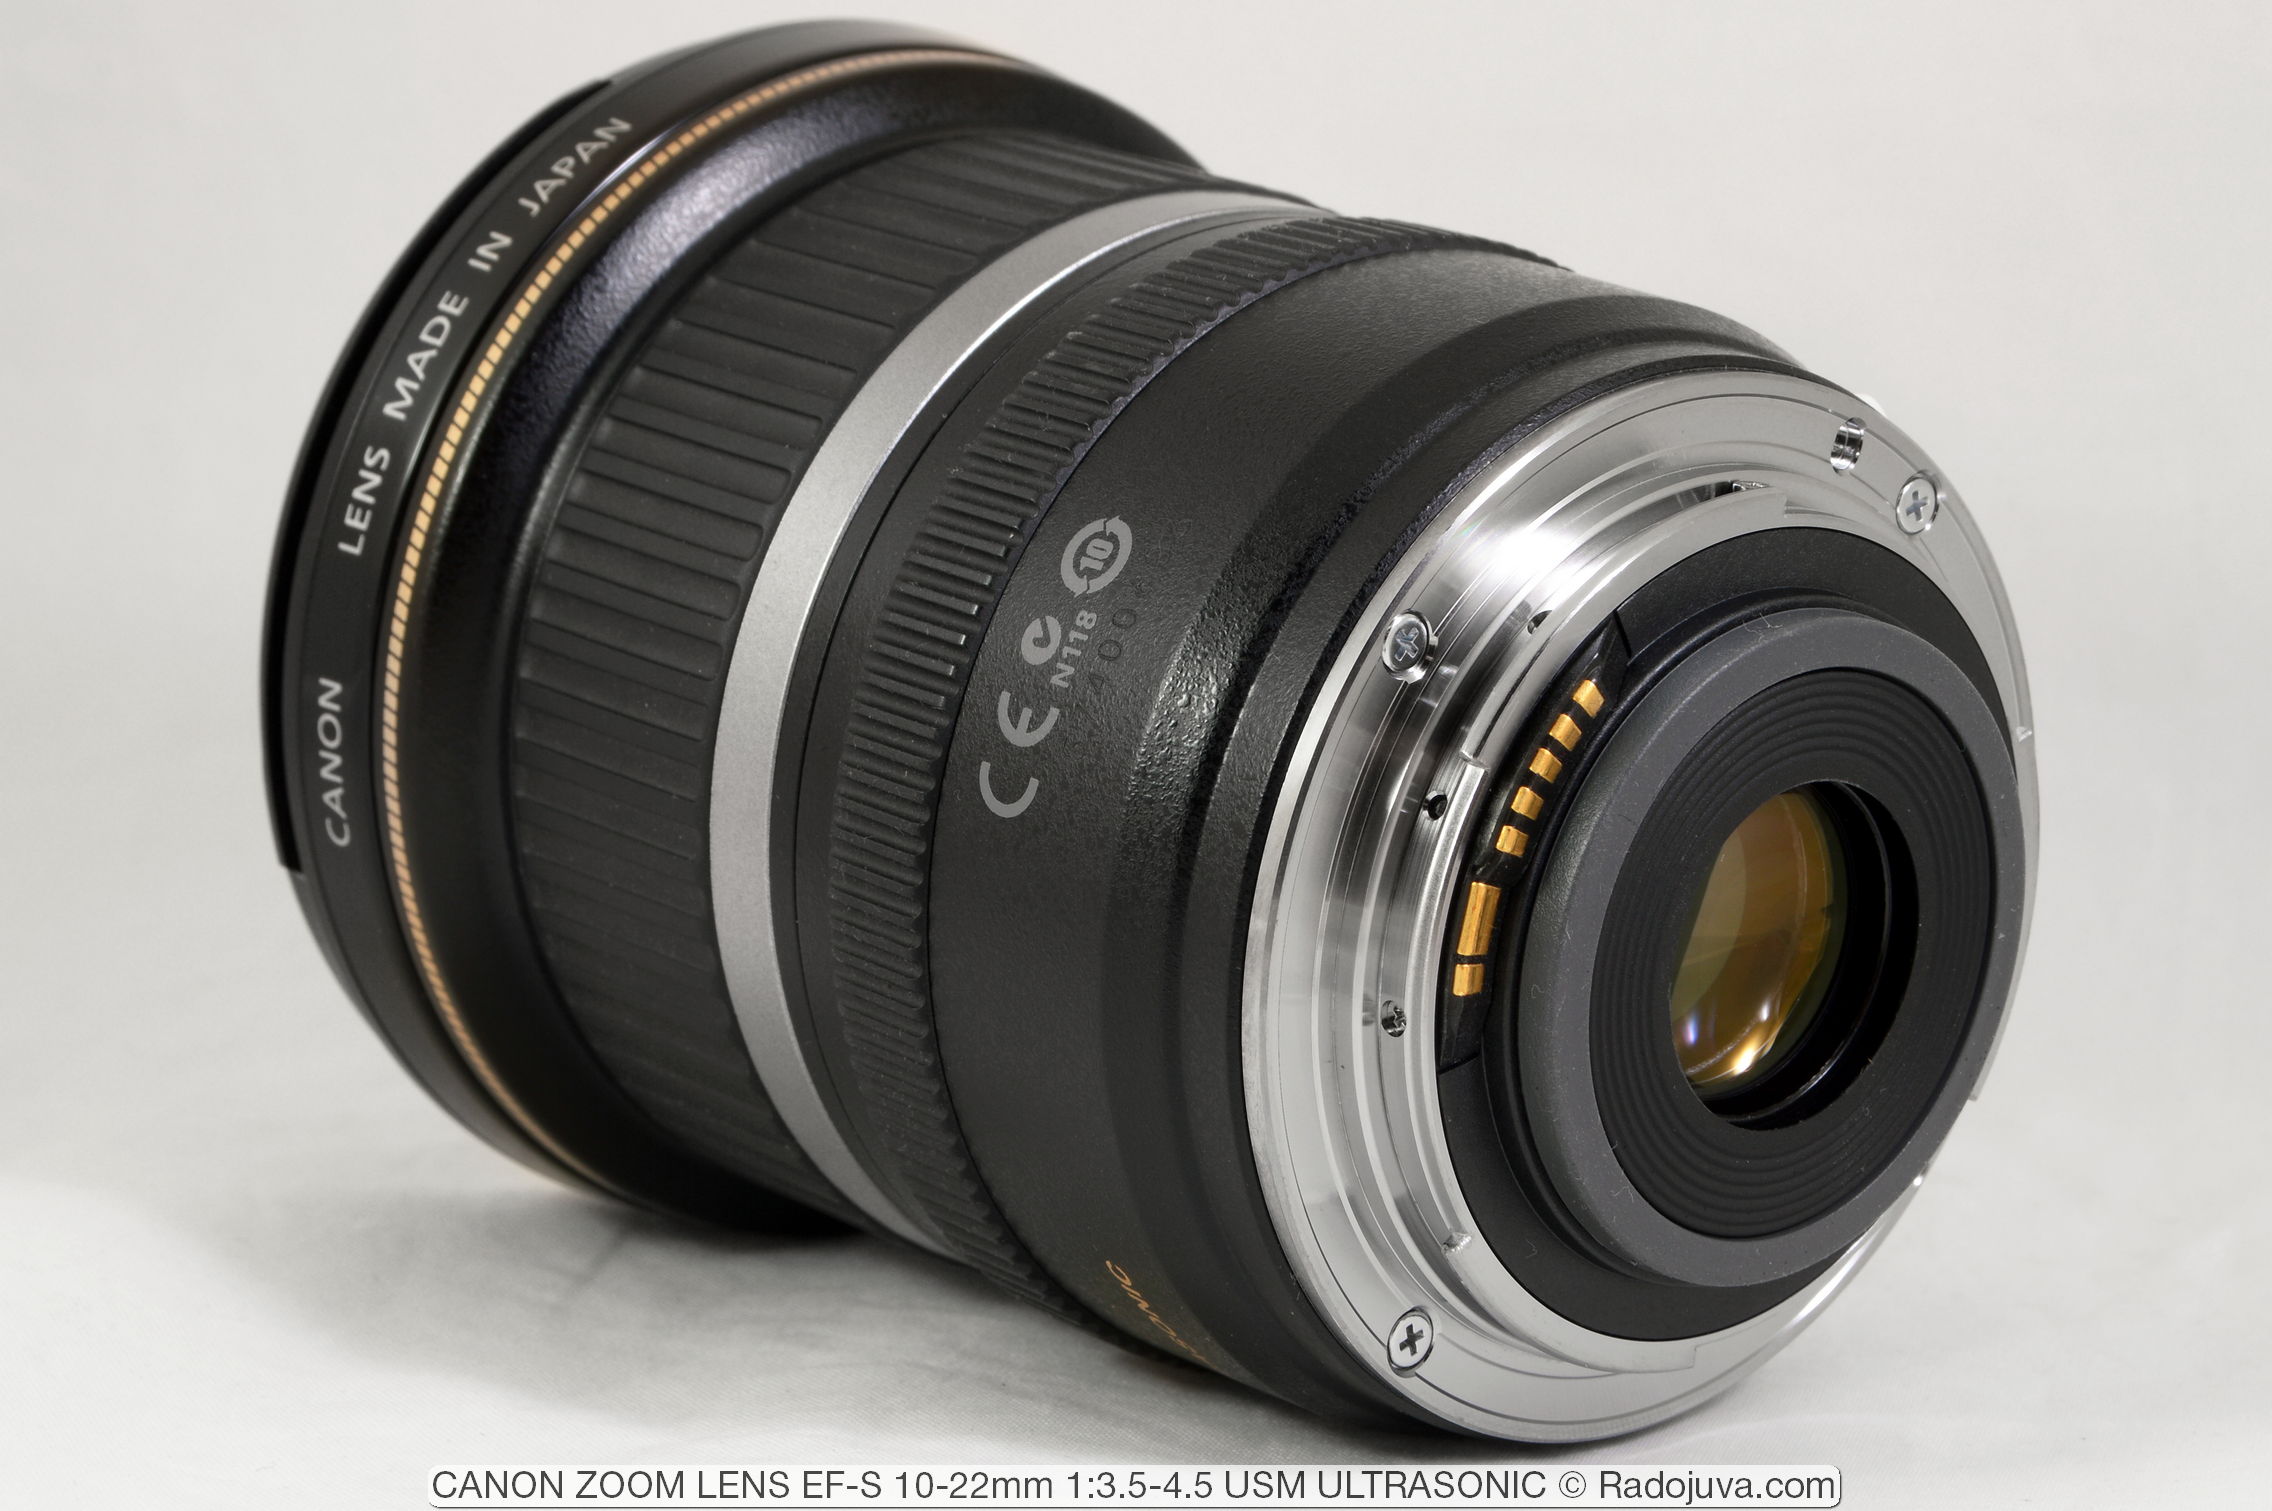 Canon Zoom Lens EF-S 10-22mm 1:3.5-4.5 USM ULTRASONICO